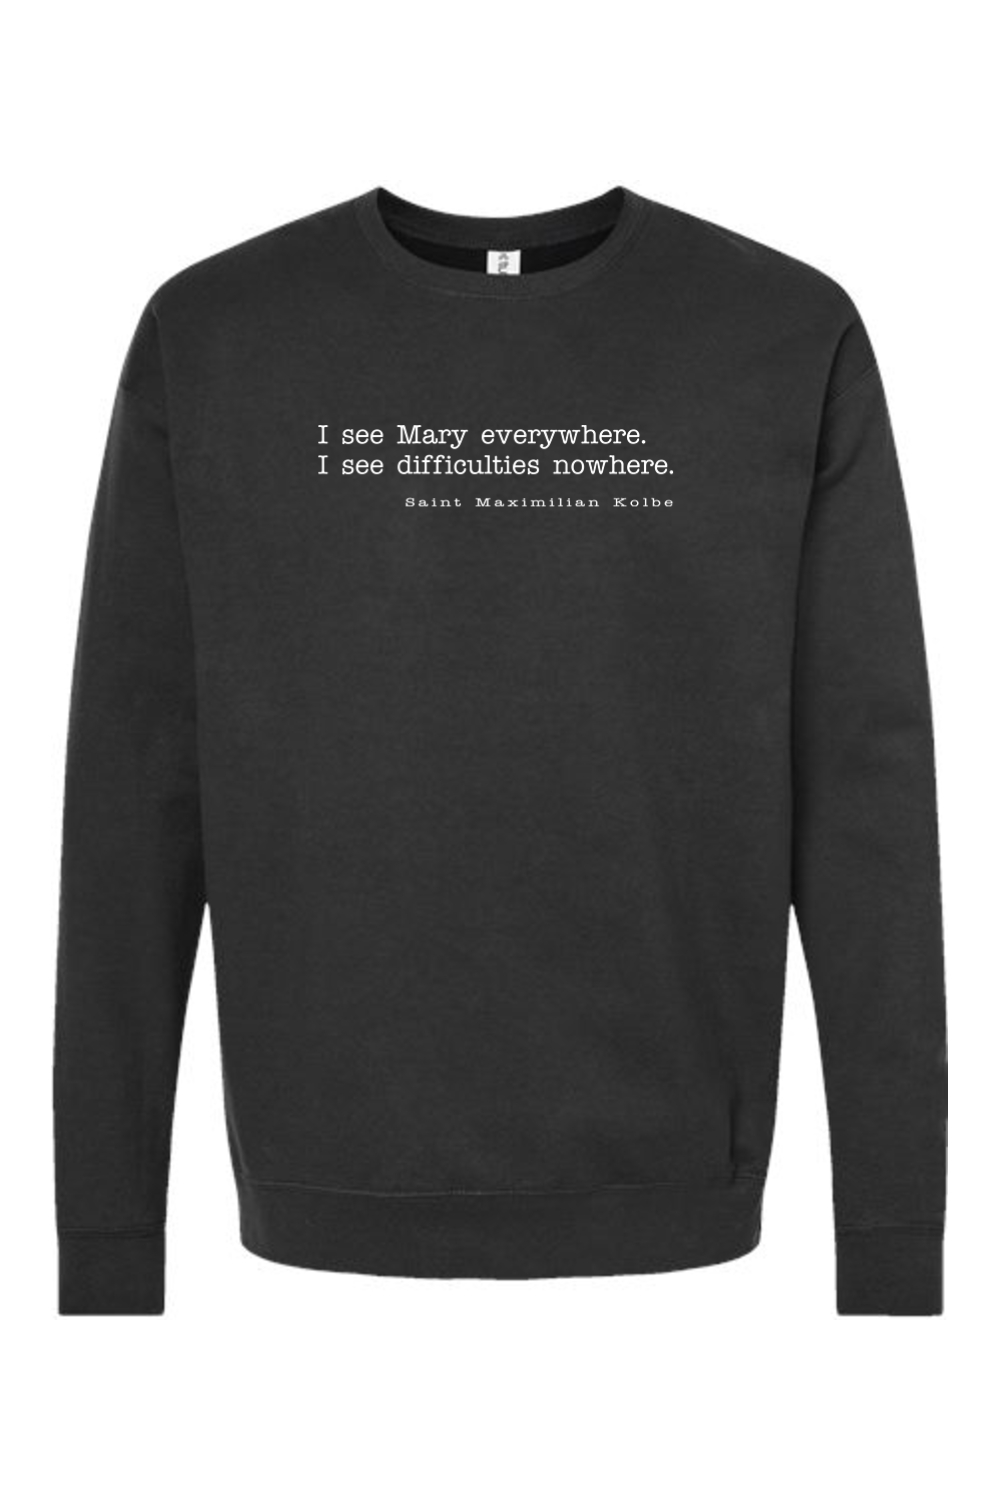 I See Mary Everywhere - St. Maximilian Kolbe Crewneck Sweatshirt